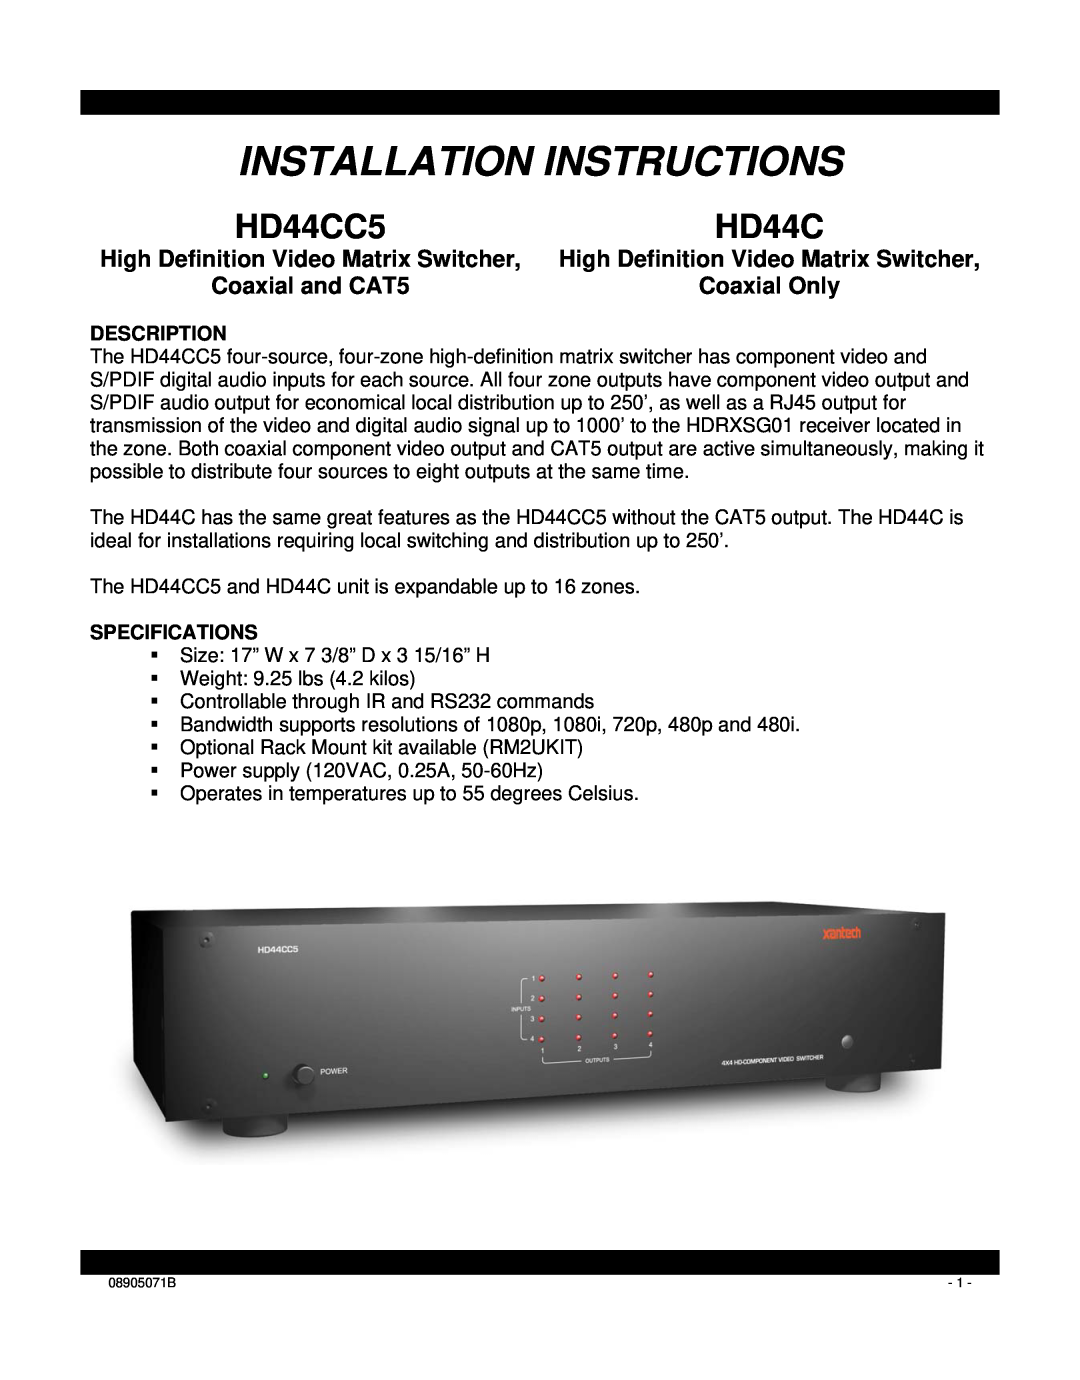 Xantech installation instructions Installation Instructions, HD44CC5, High Definition Video Matrix Switcher 